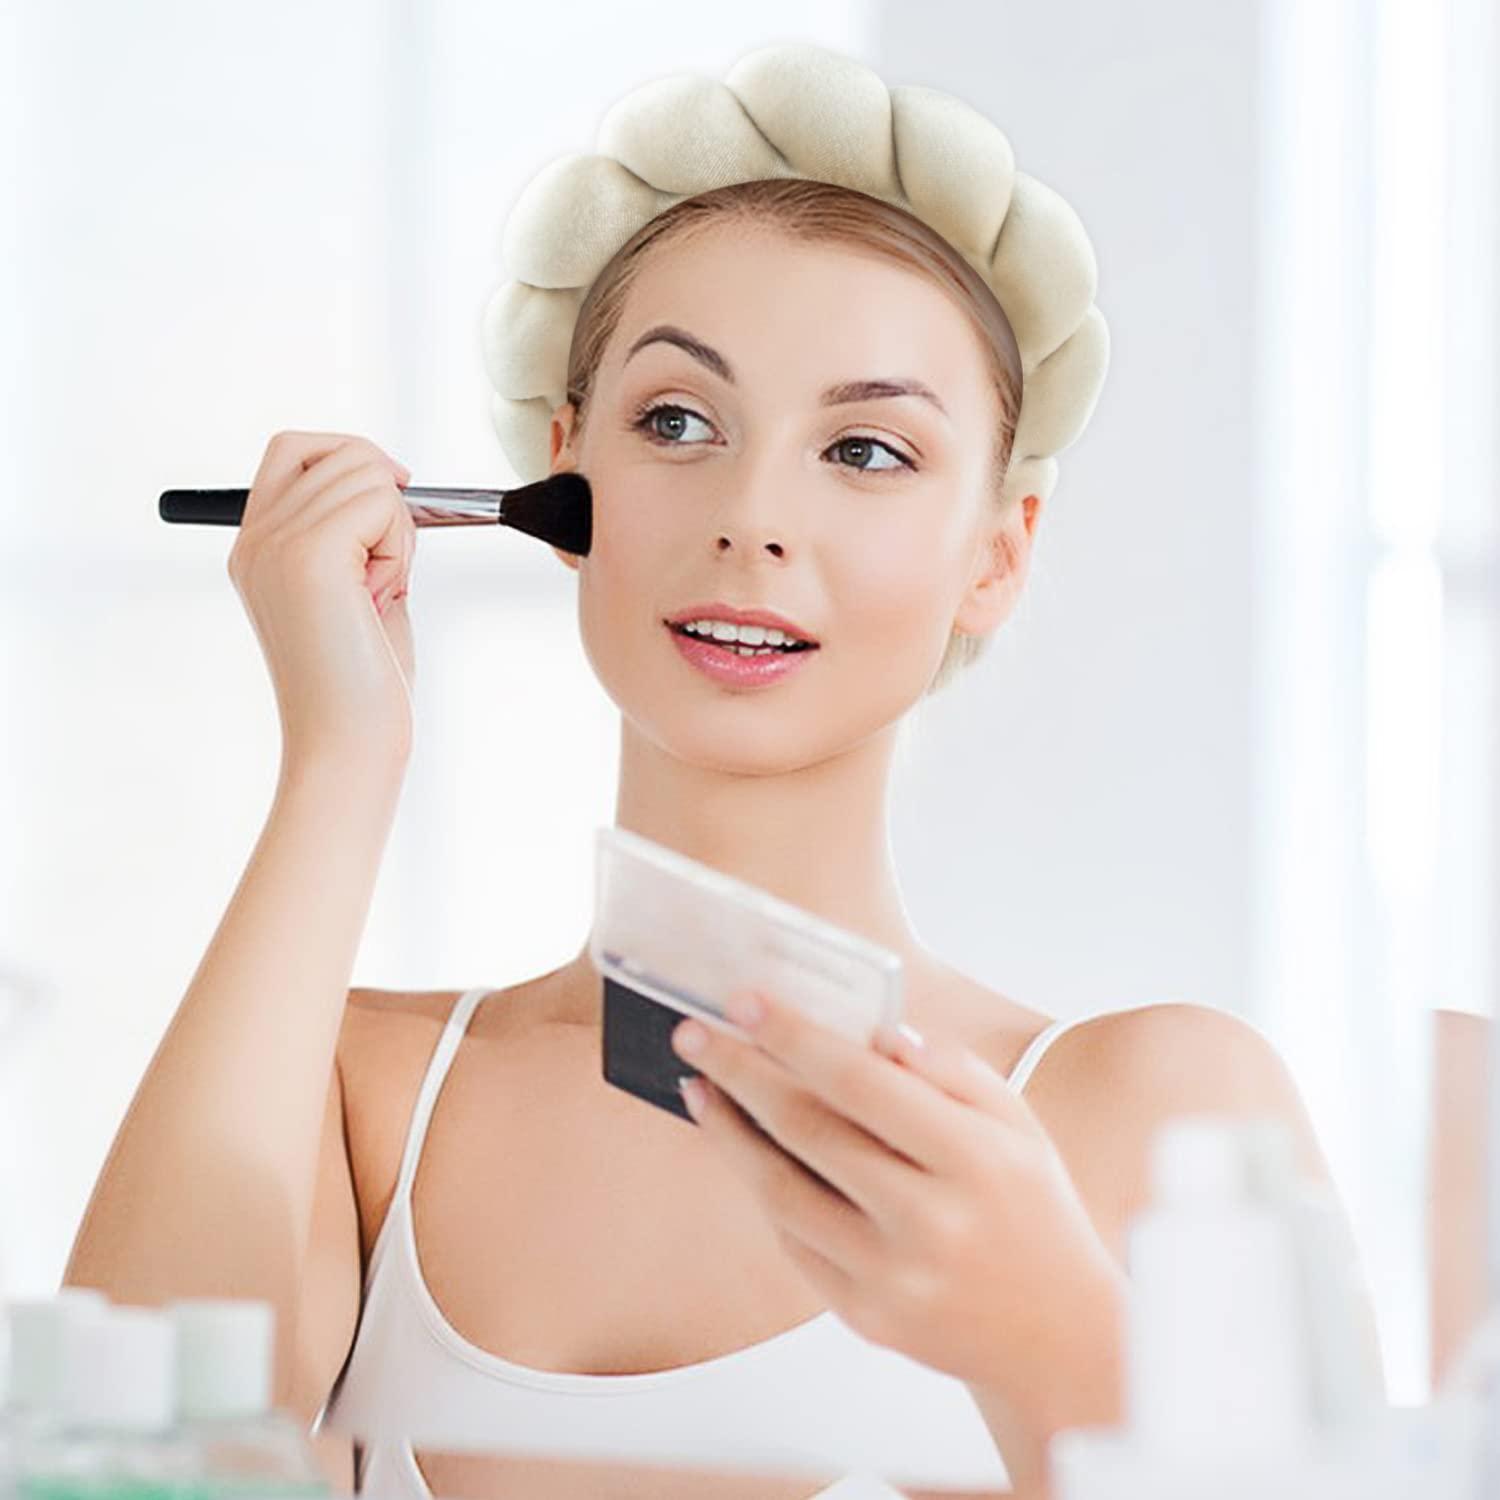  Spa Makeup Headband for Washing Face, Sponge Skincare